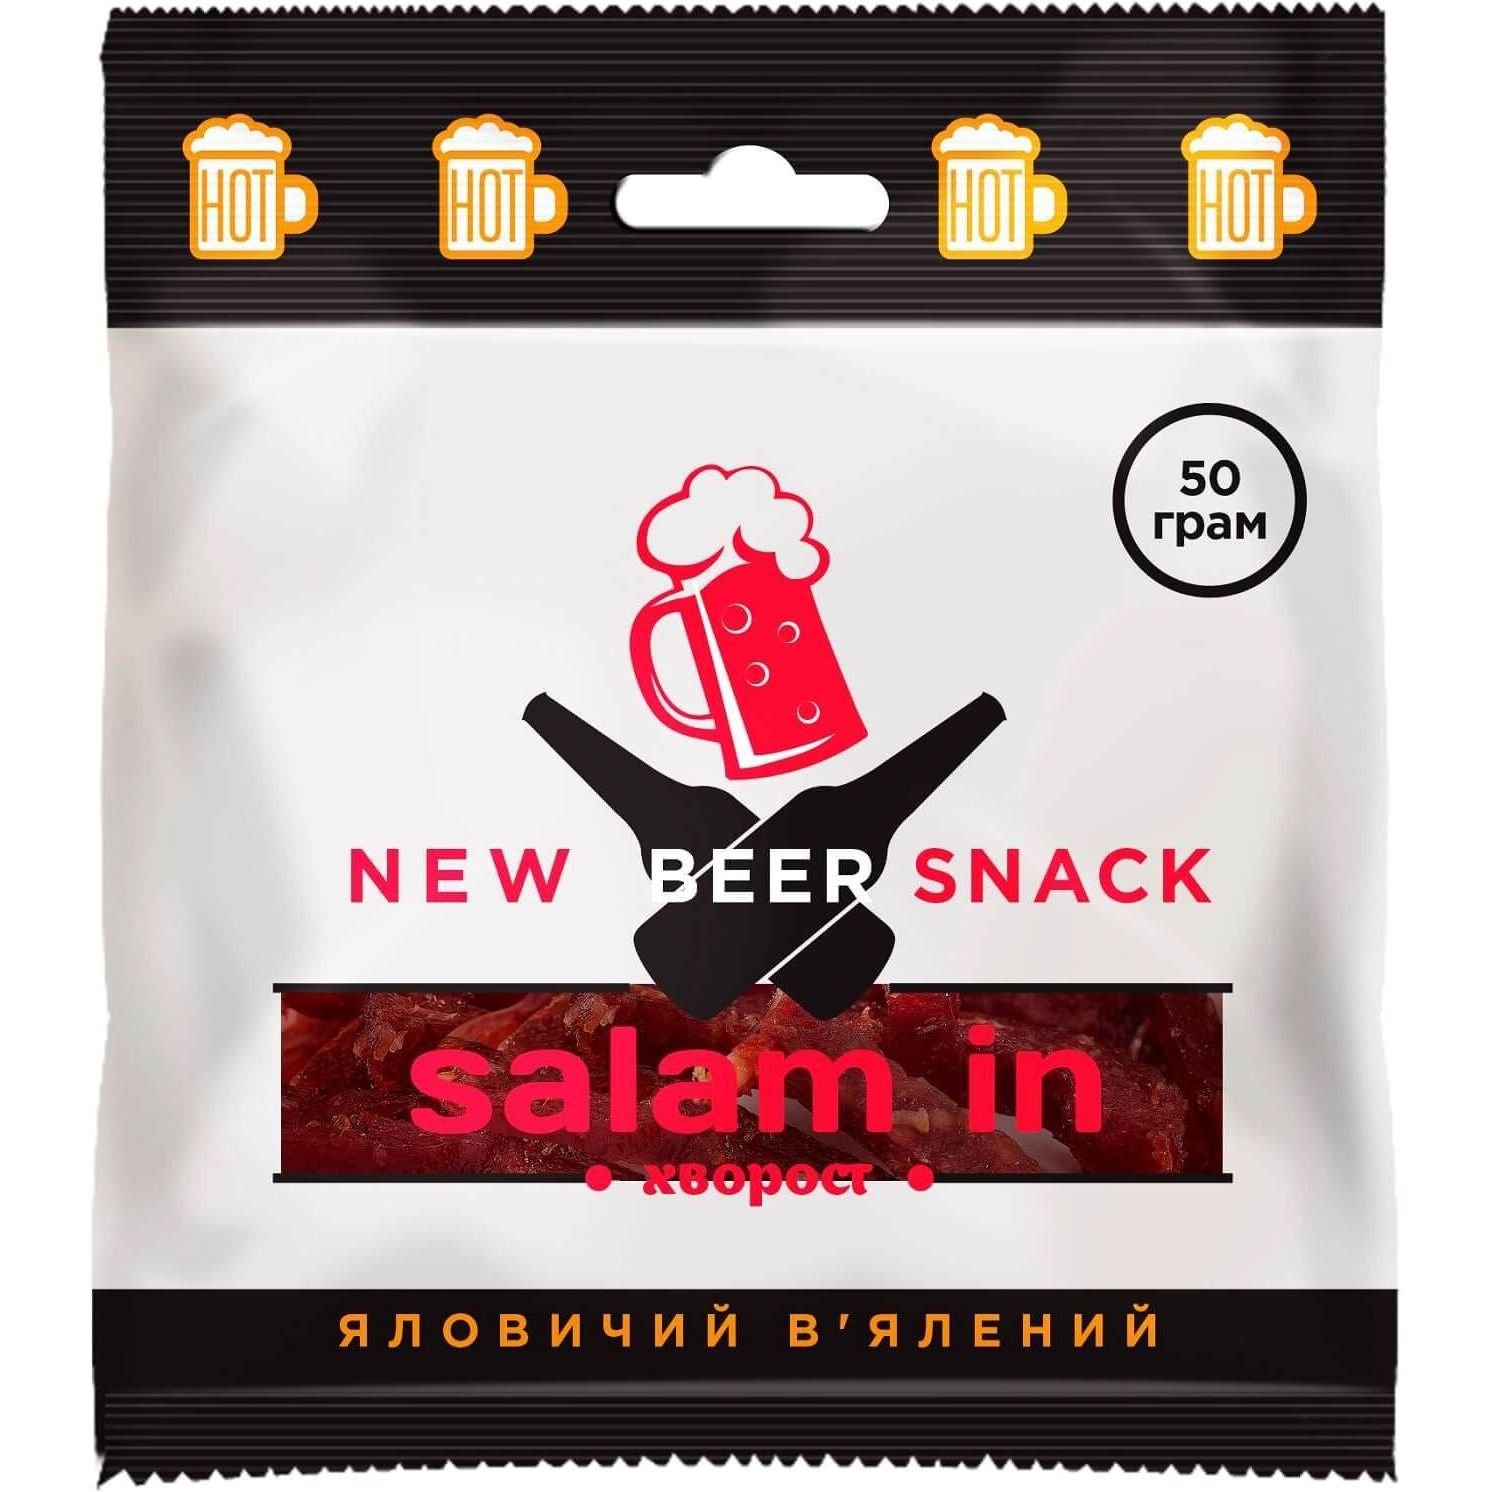 Хворост говяжий New Beer Snack Salam in сыровяленый 50 г (704001) - фото 1